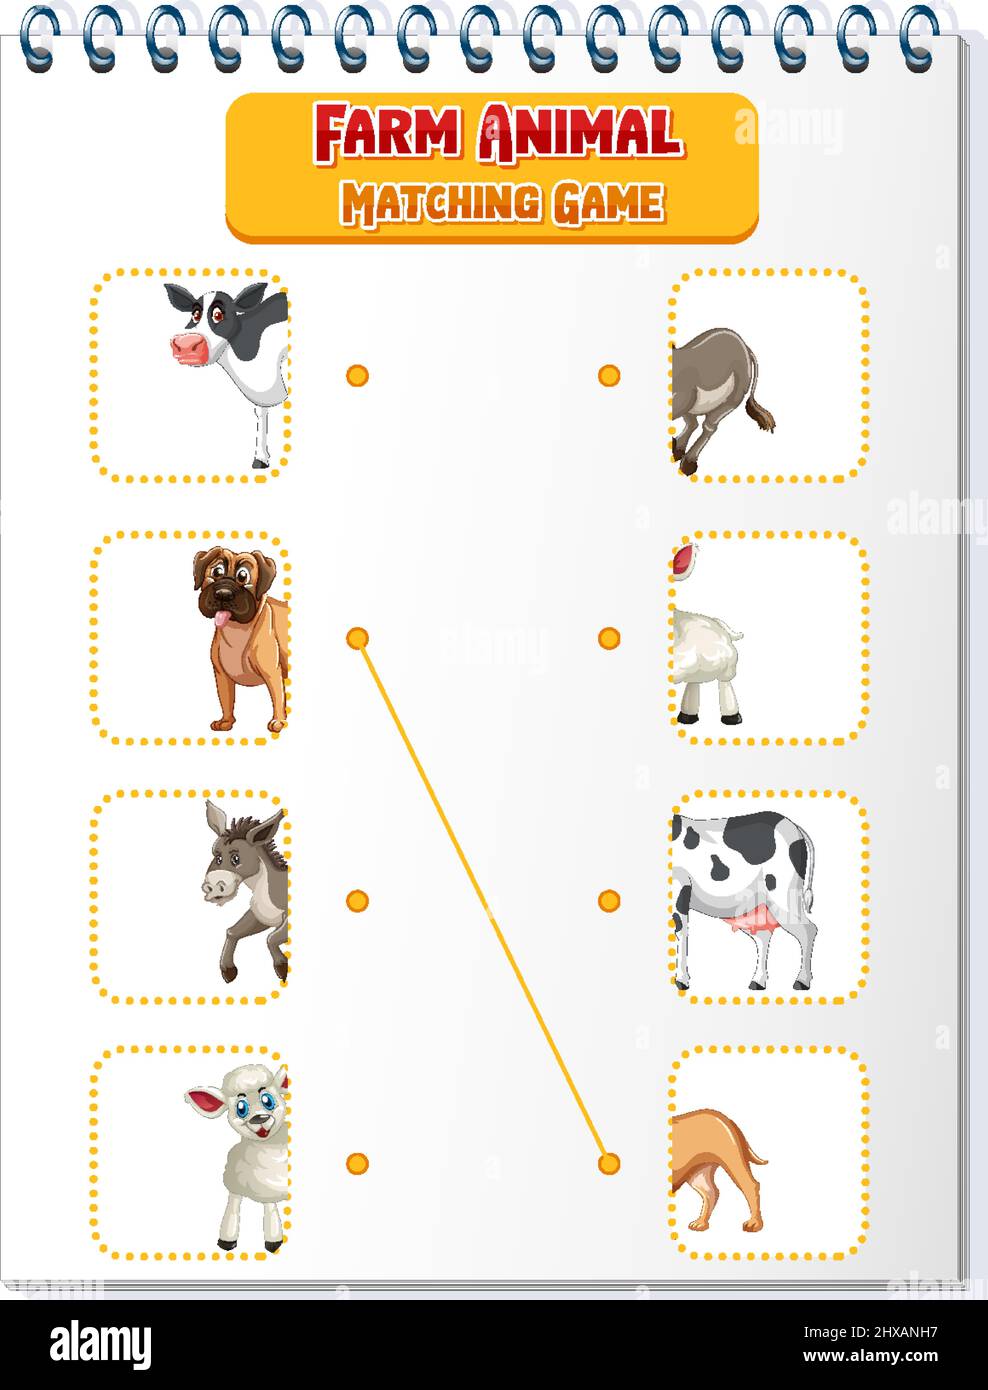 Farm Animal Matching Game illustration Stock Vector Image & Art - Alamy